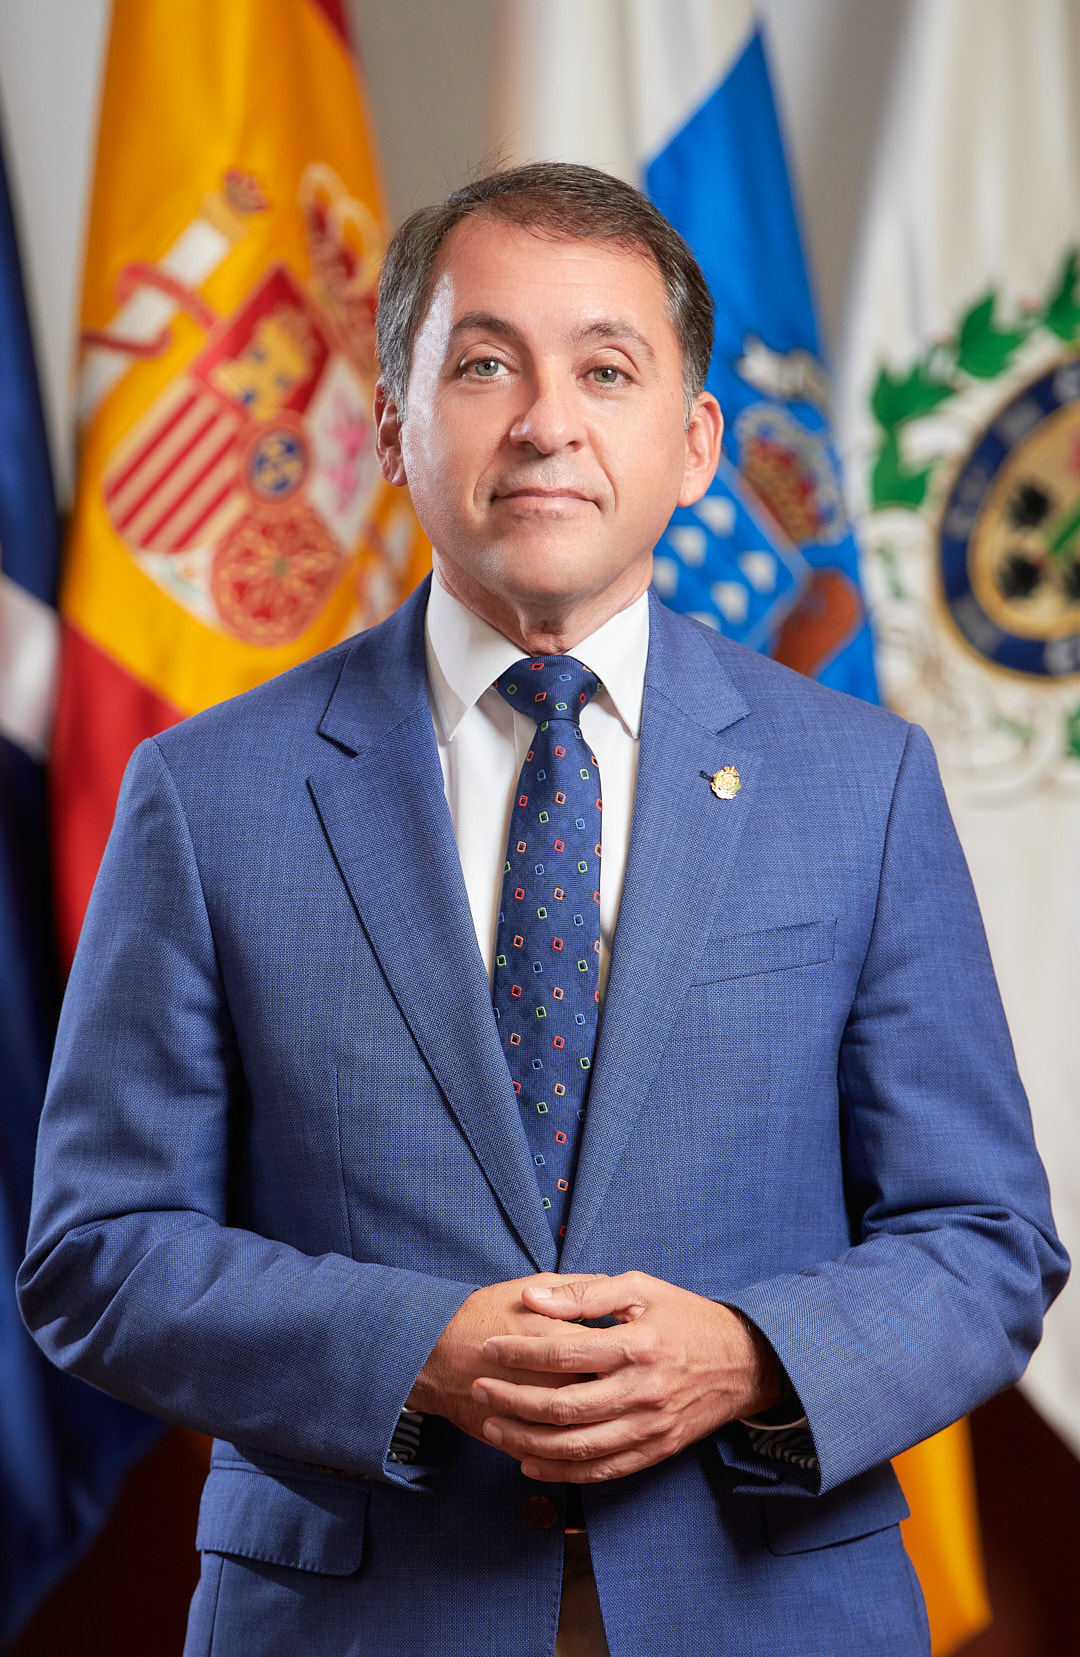 José Manuel Bermúdez Esparza